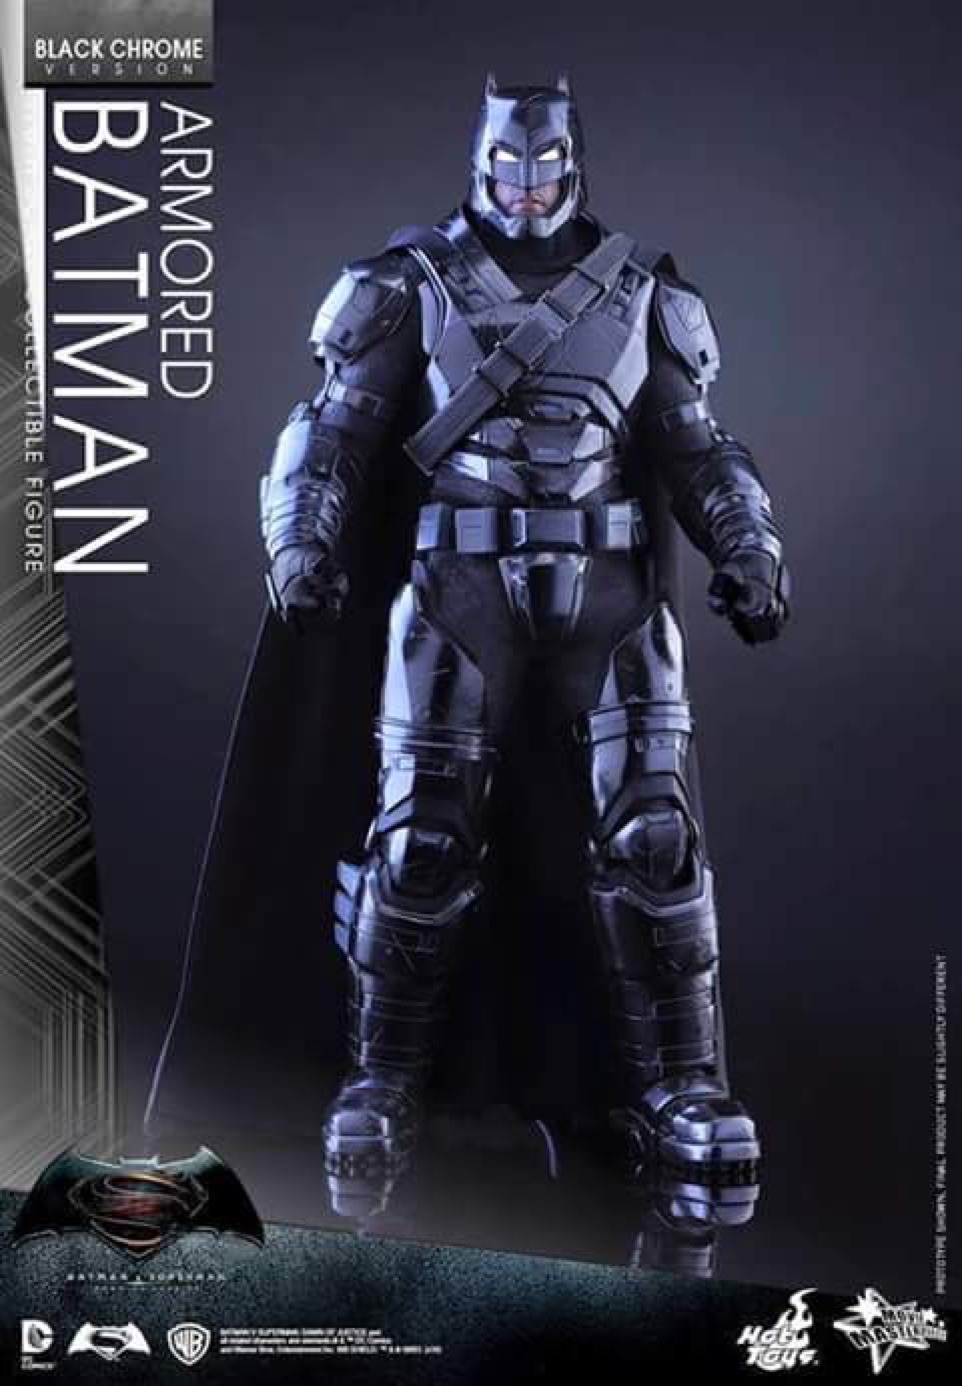 longlivethebat-universe:  Hot Toys Black Chrome Edition Armored Batman 